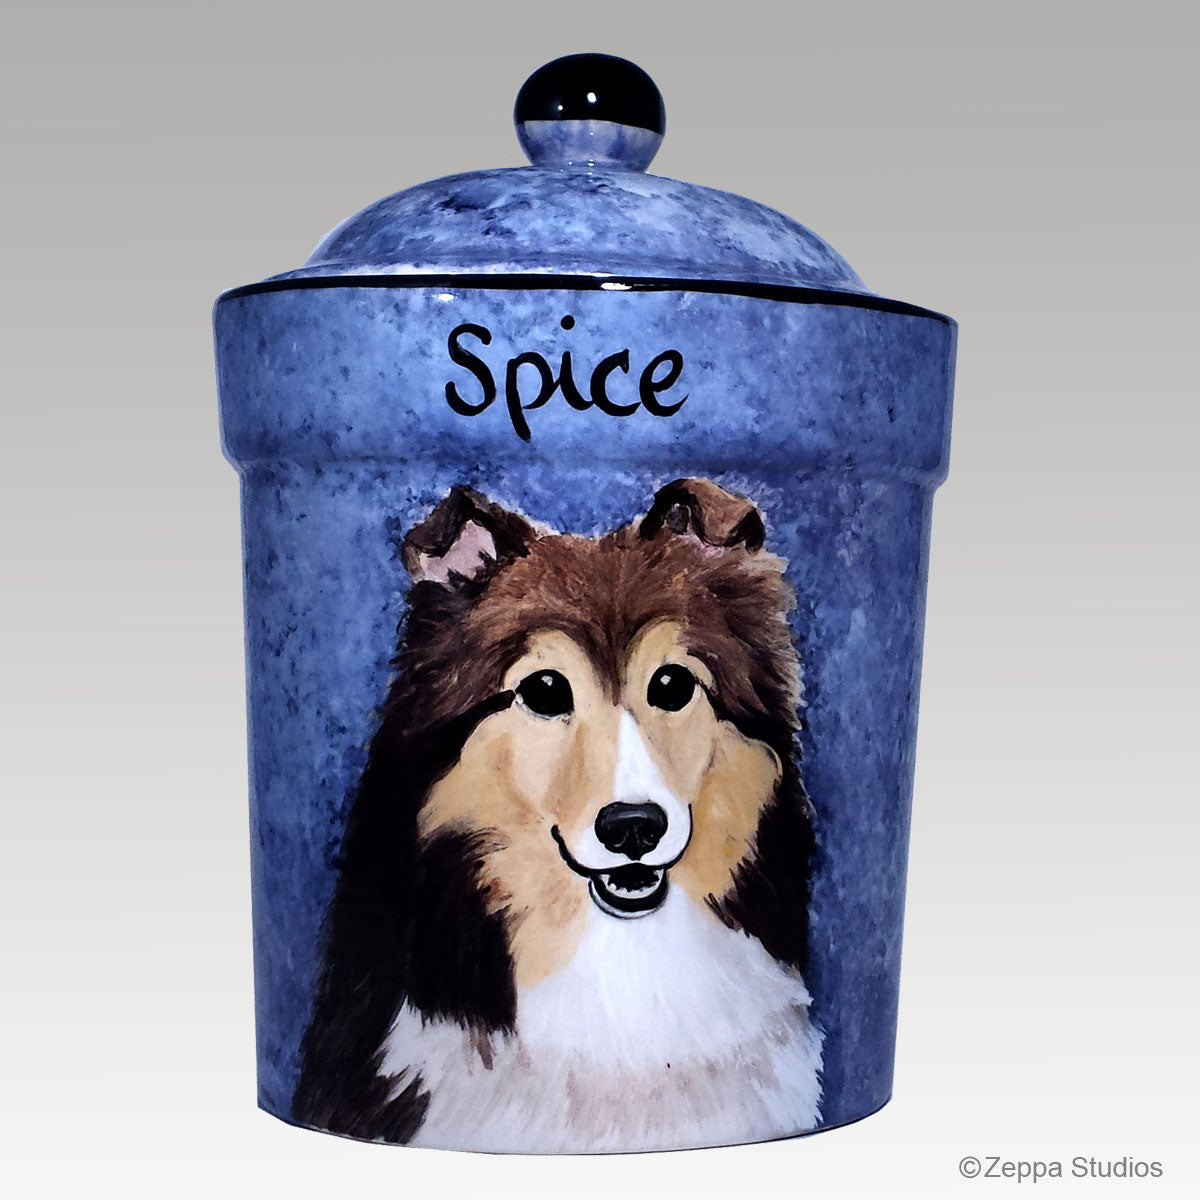 Custom Hand Painted Ceramic Treat Jar, "Spice" by Zeppa Studios